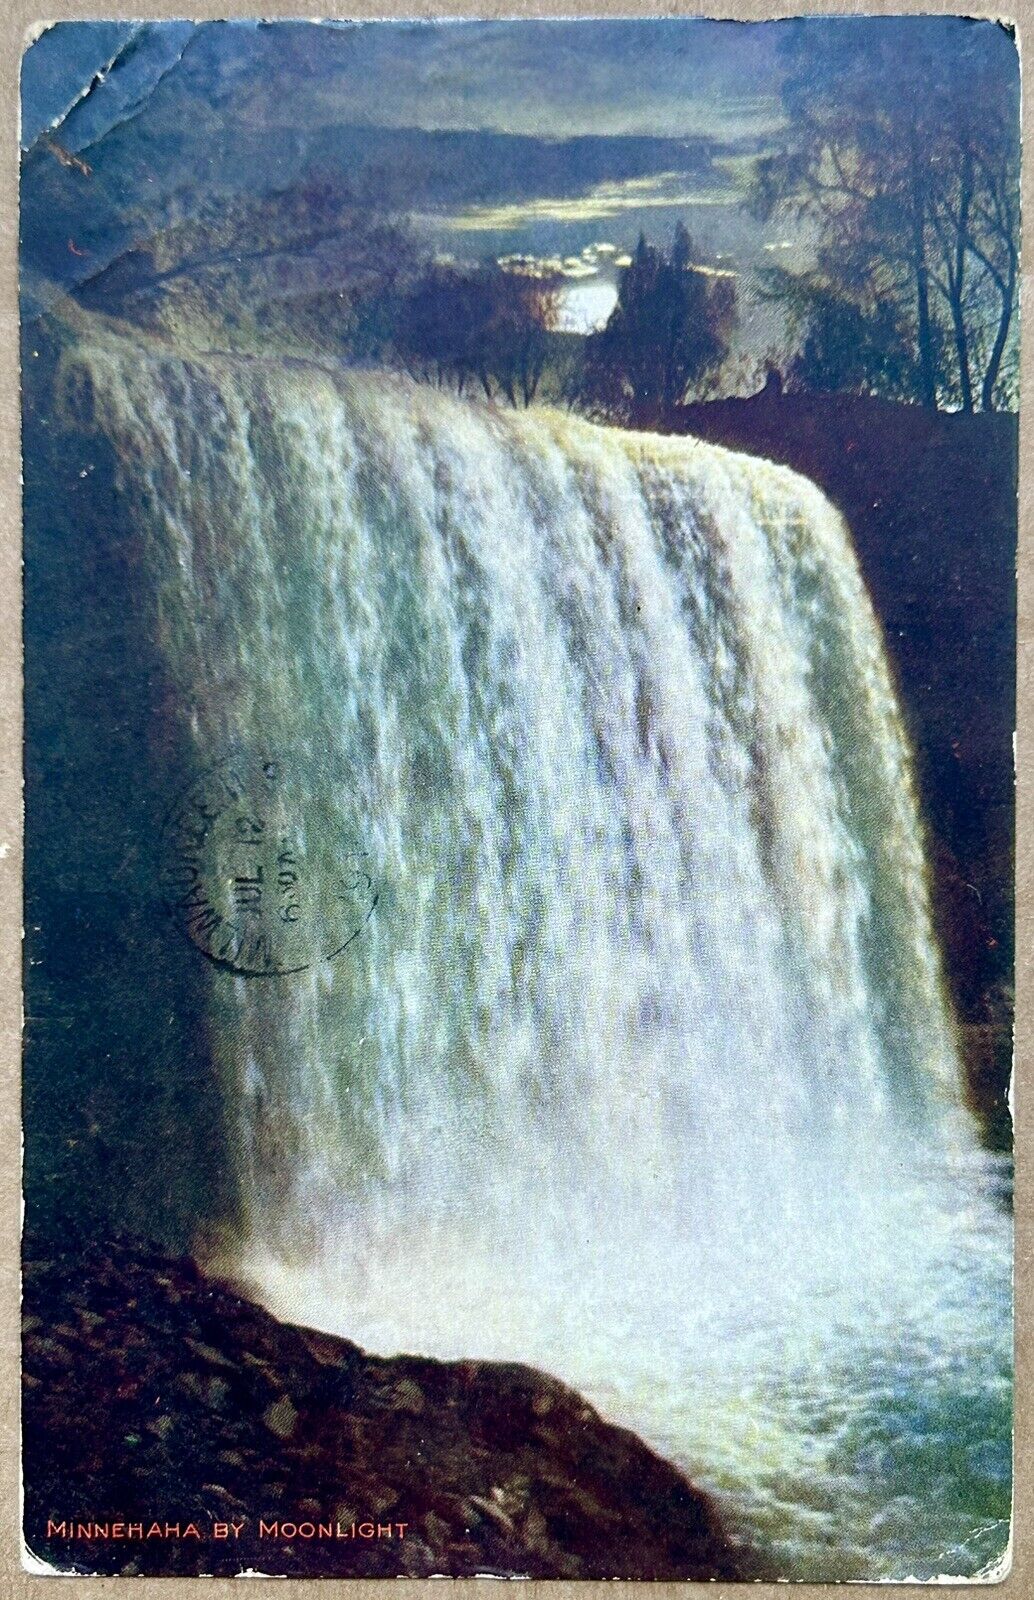 MINNEHAHA BY MOONLIGHT waterfall 1910 Vintage Postcard